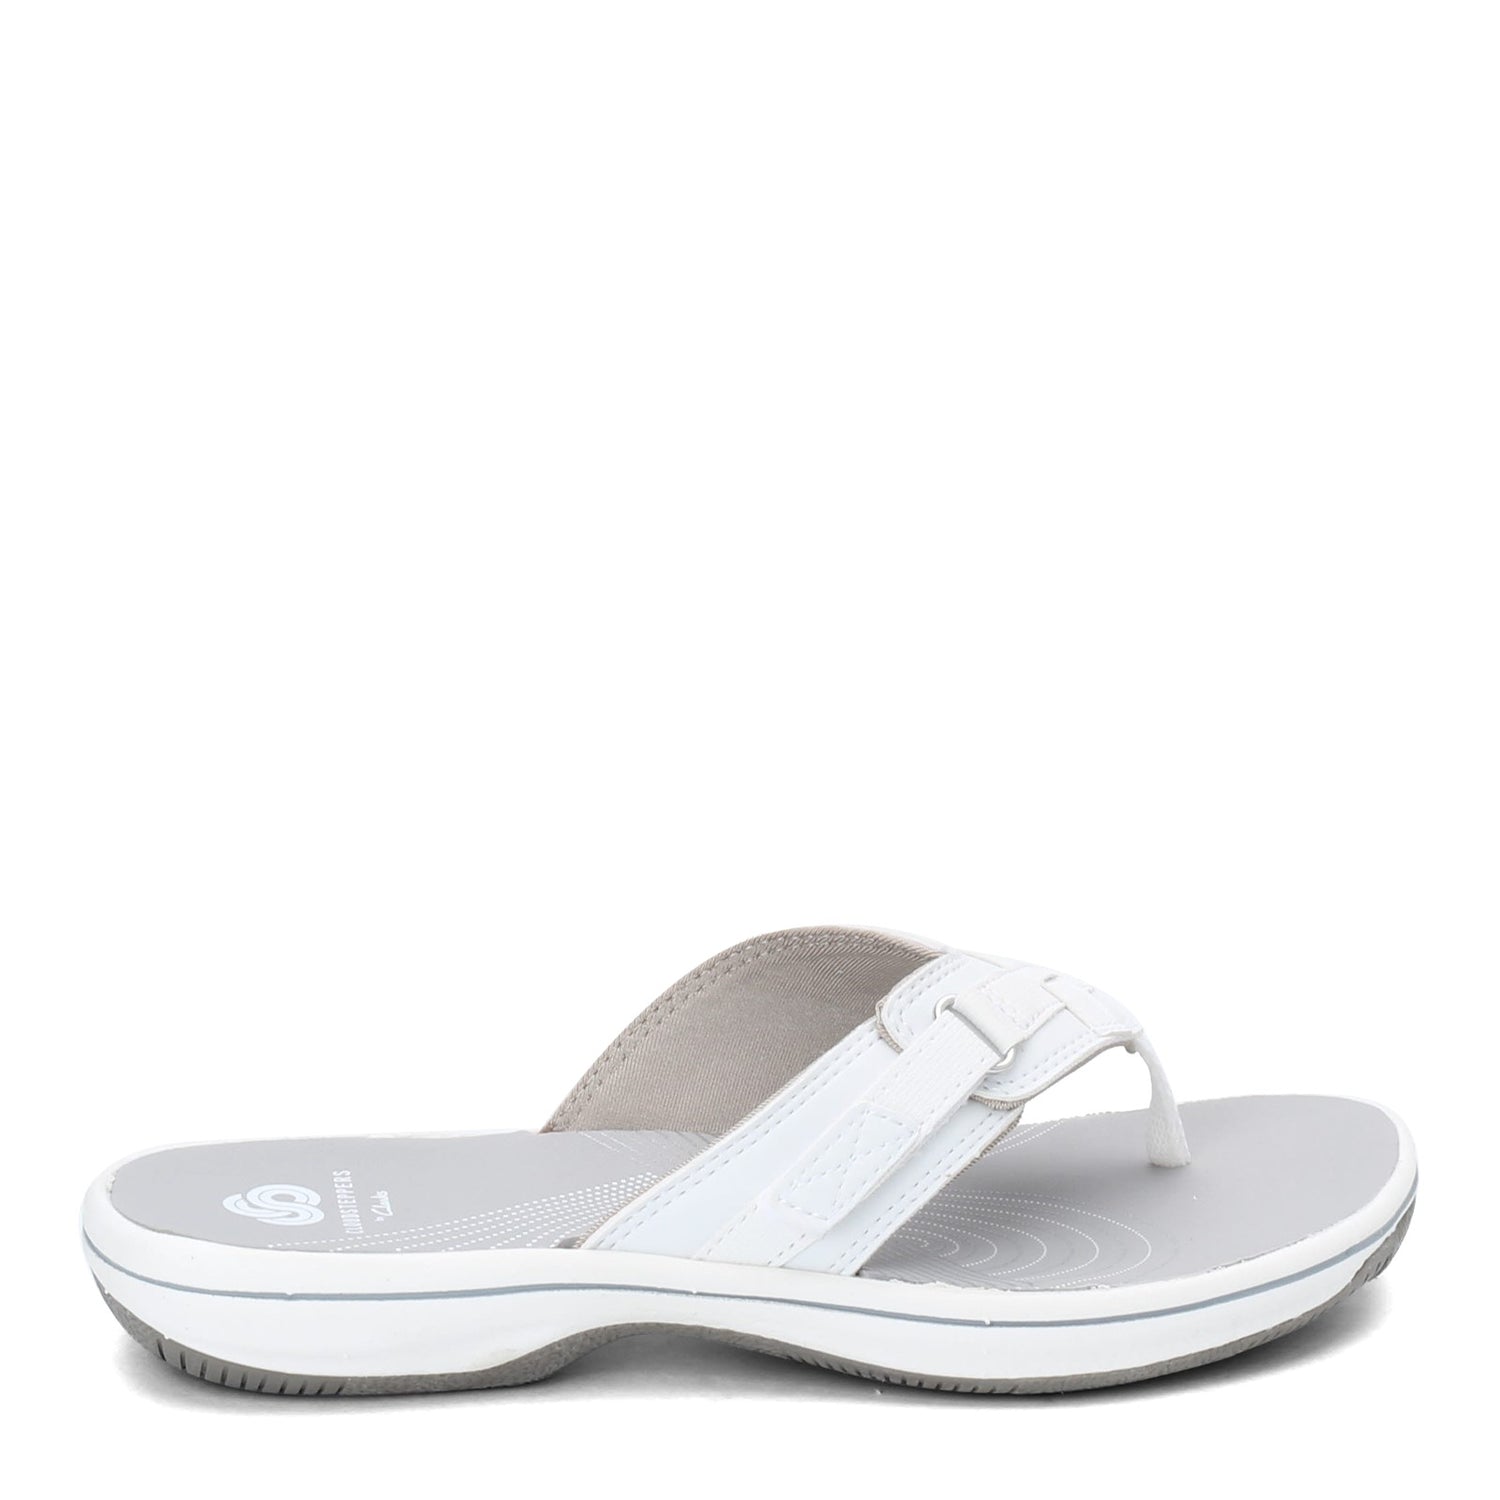 Peltz Shoes  Women's Clarks Breeze Sea Sandal WHITE 26125508